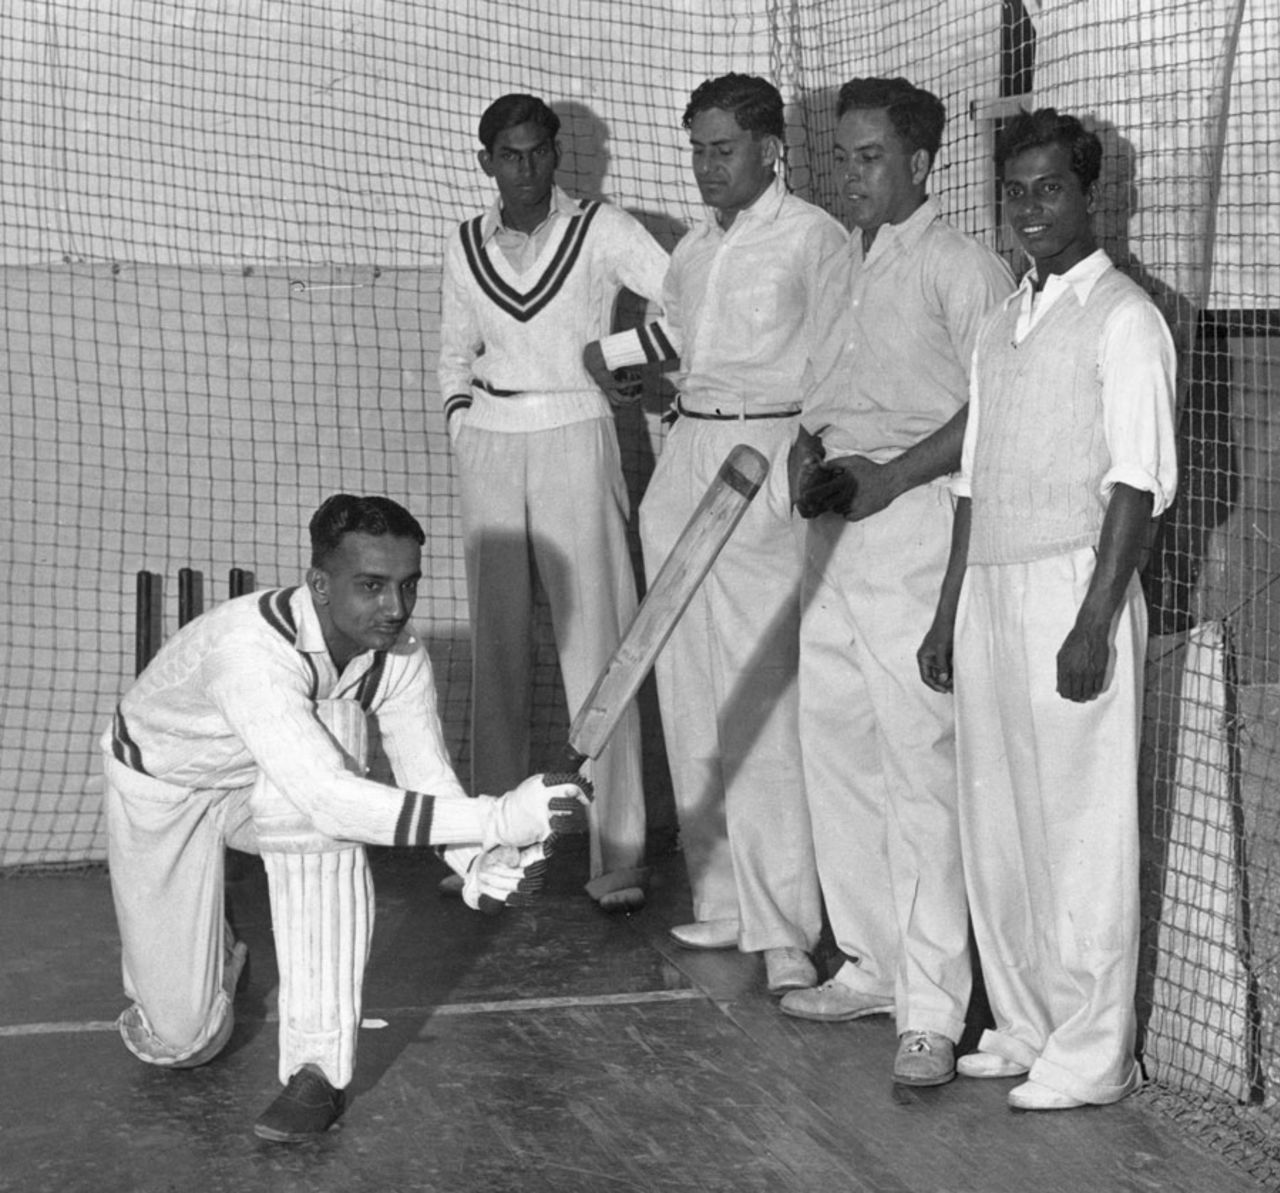 Vijay Merchant bats in the indoor nets of the Alan Fairfax Cricket School as his team-mates look on, London, April 21, 1936